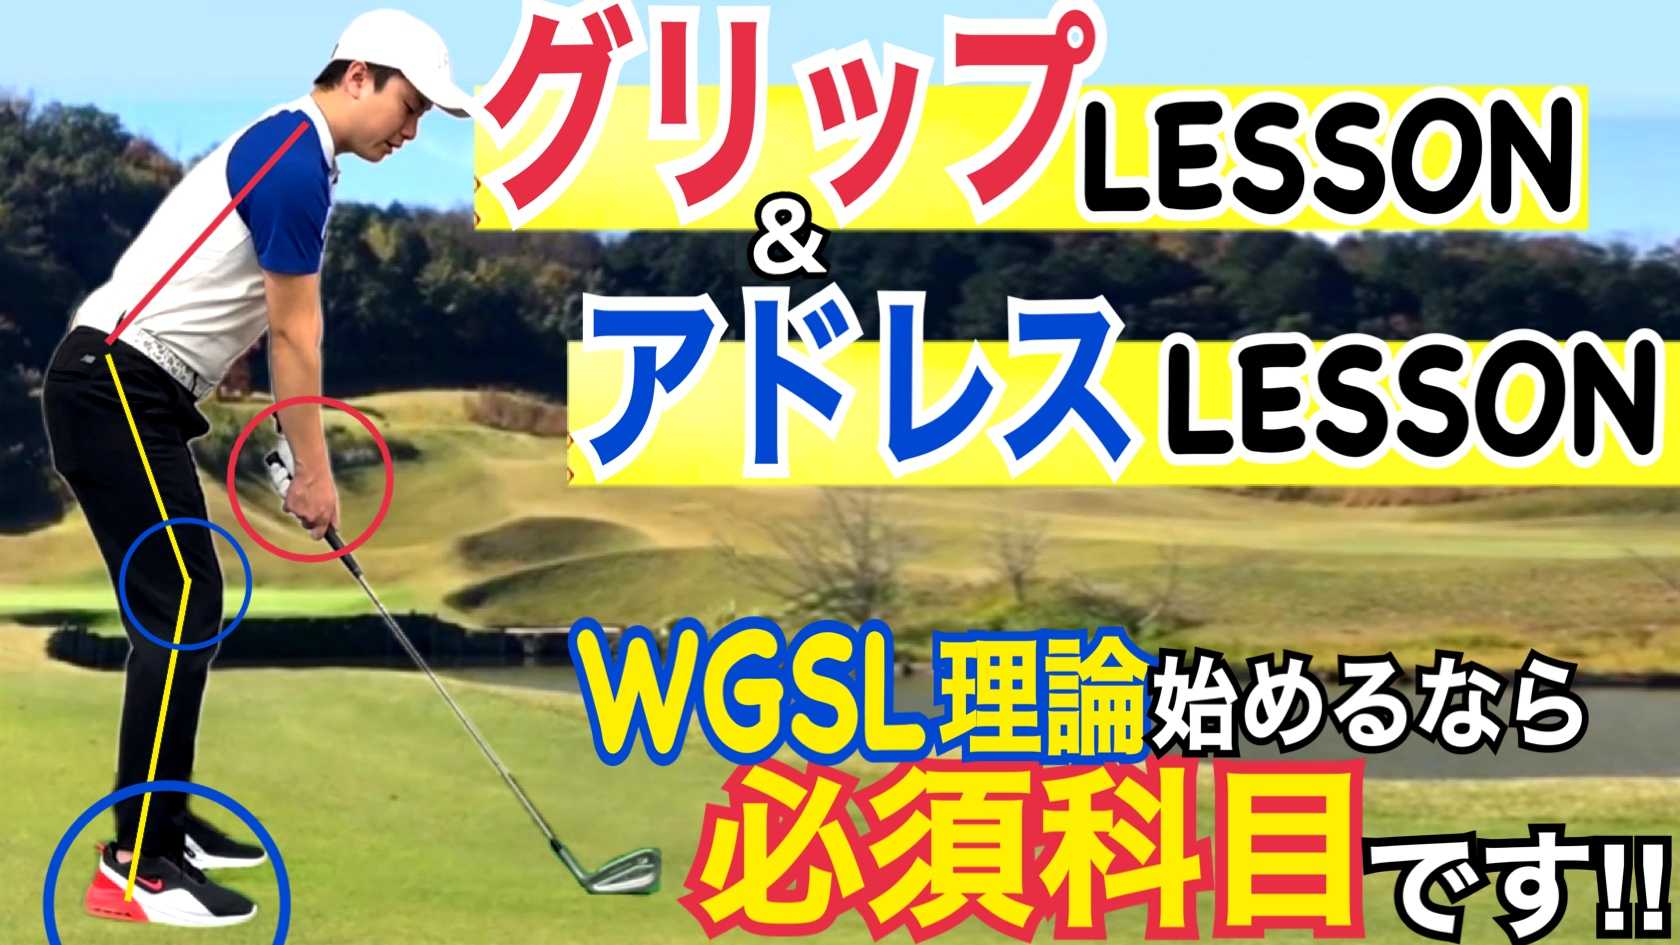 World Golf Swing Labo <WGSL>